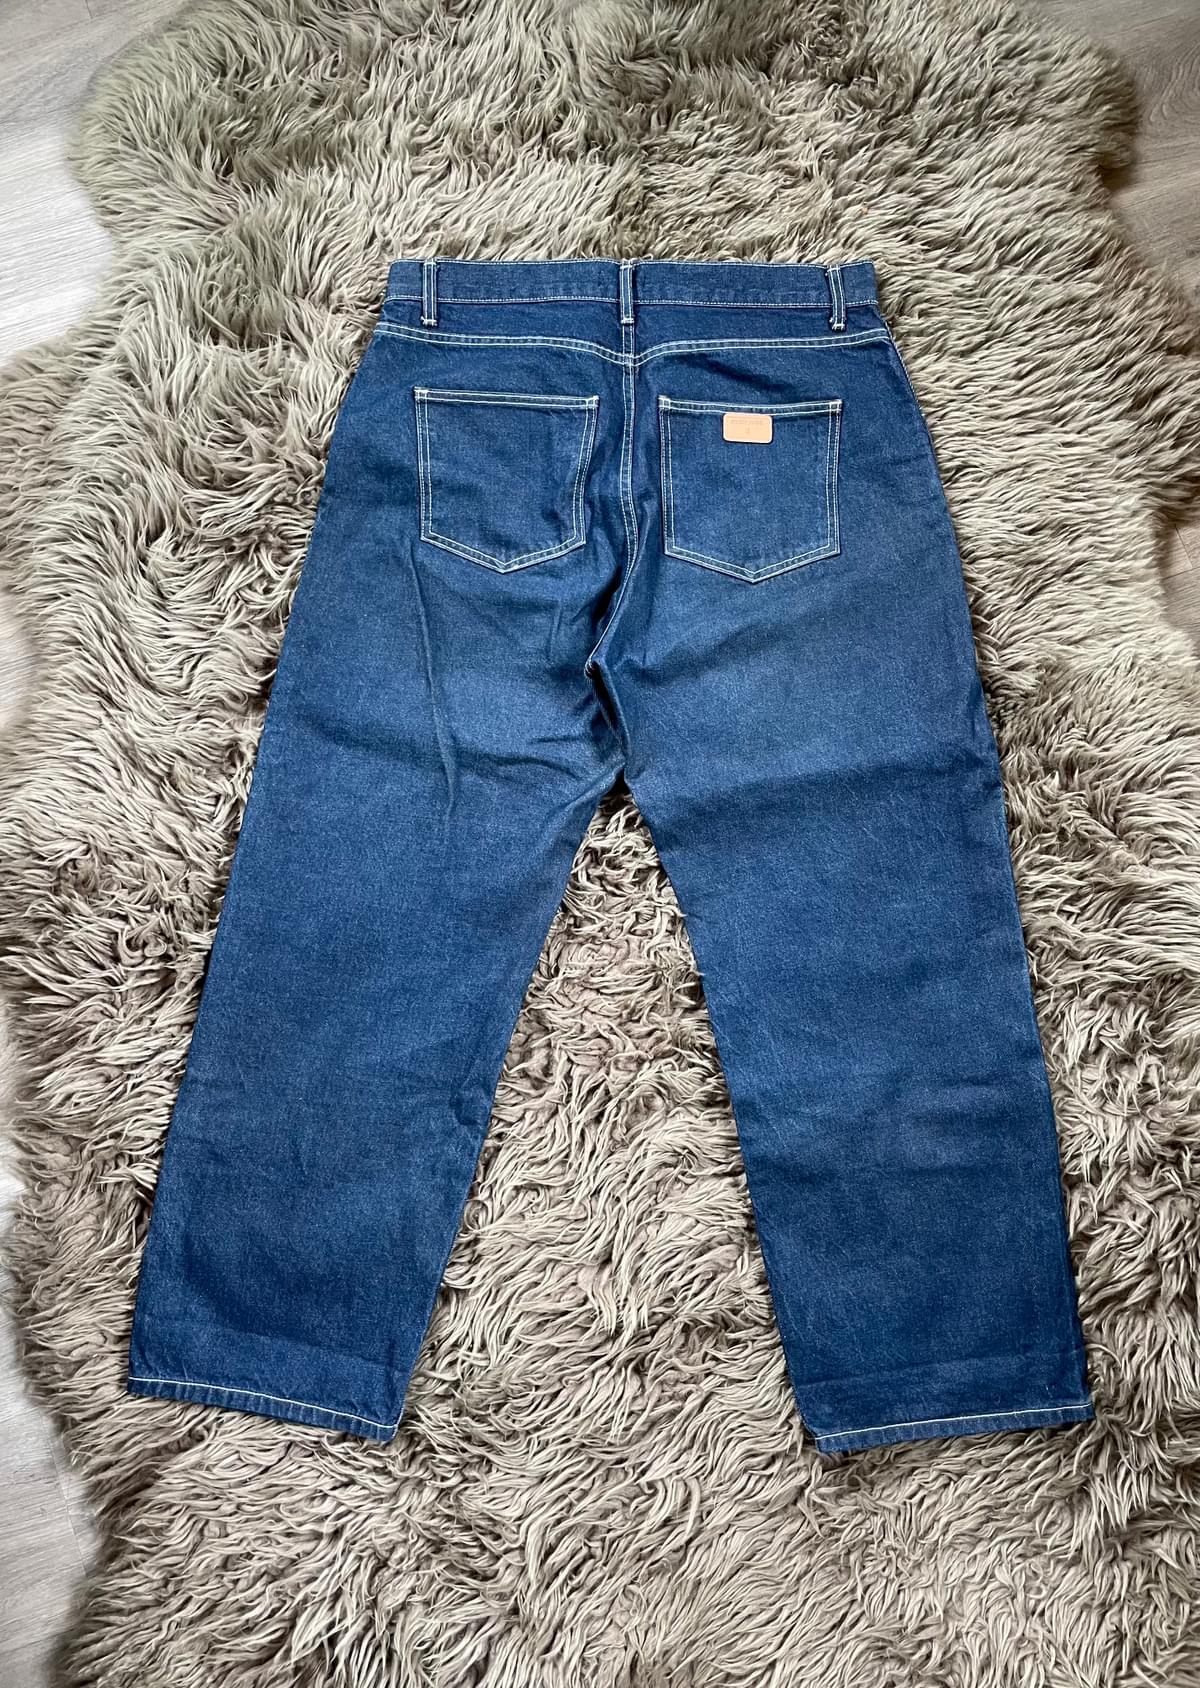 Rudy Jude Utility Jeans (5) | Noihsaf Bazaar